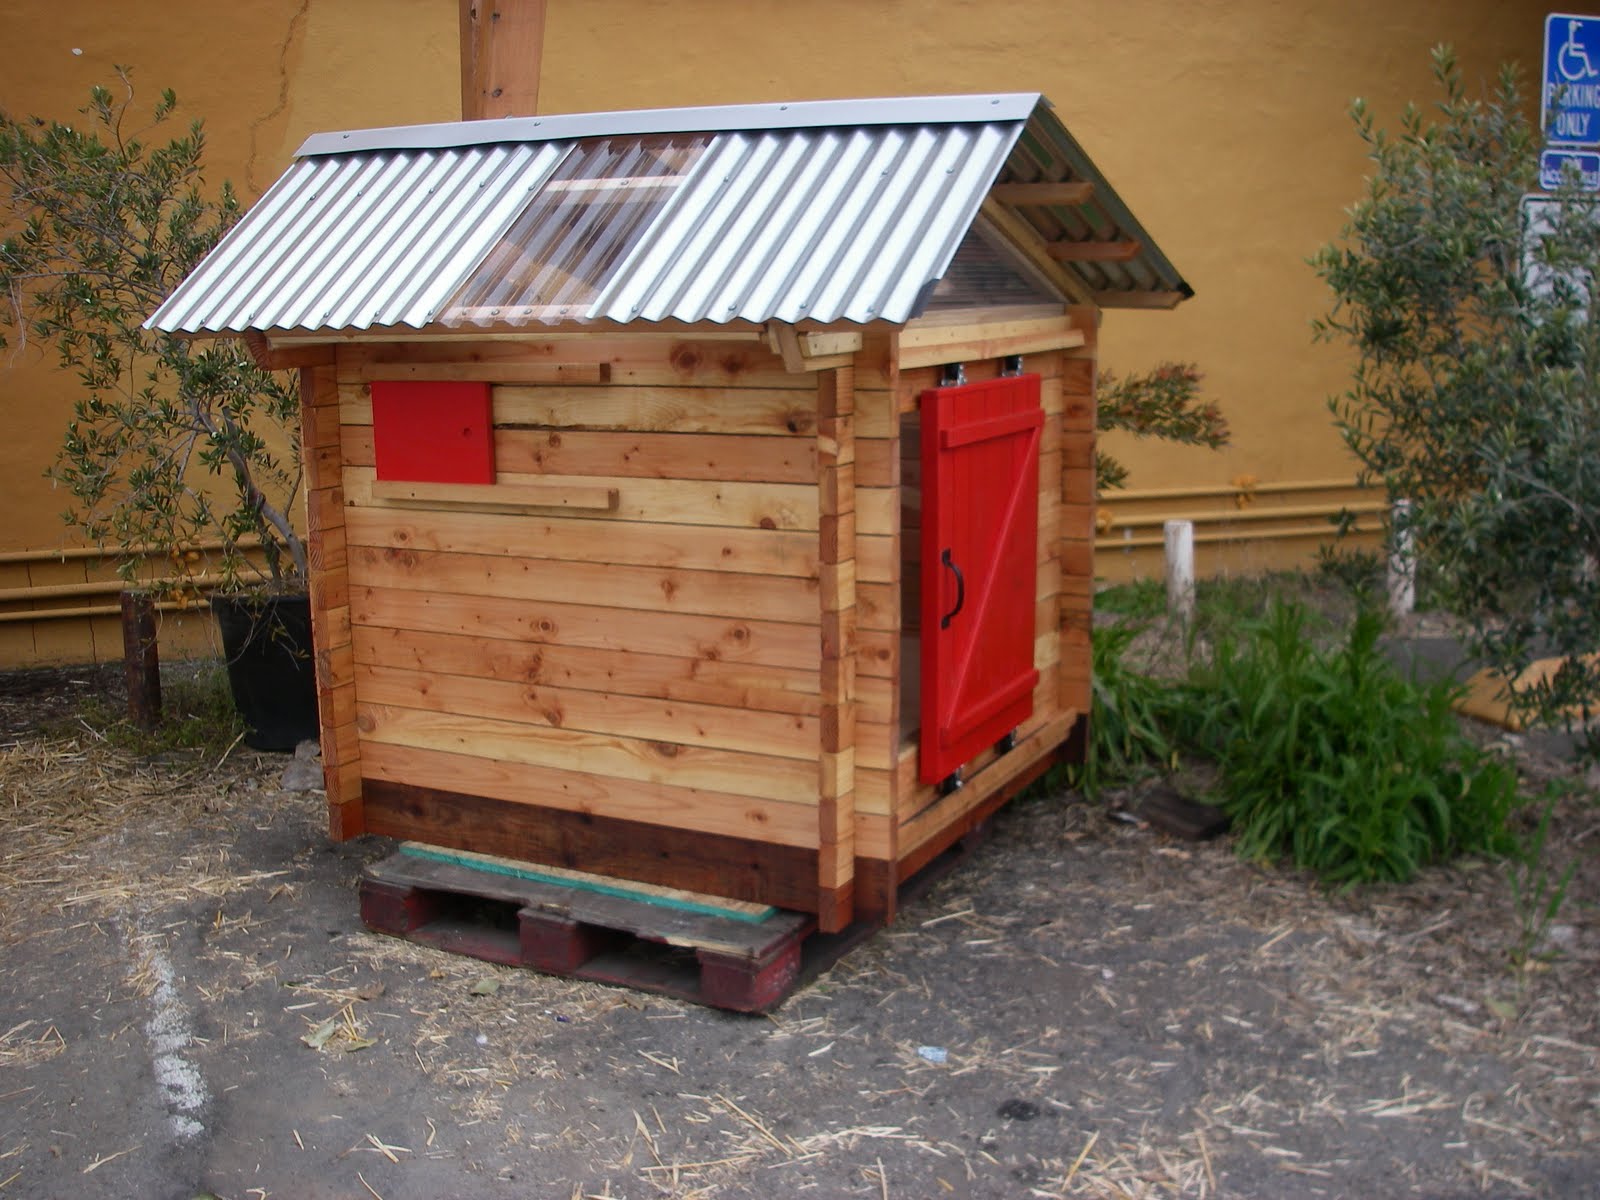 Just Fine Design Build: Modern Log Cabin Chicken Coop Now For Sale at 